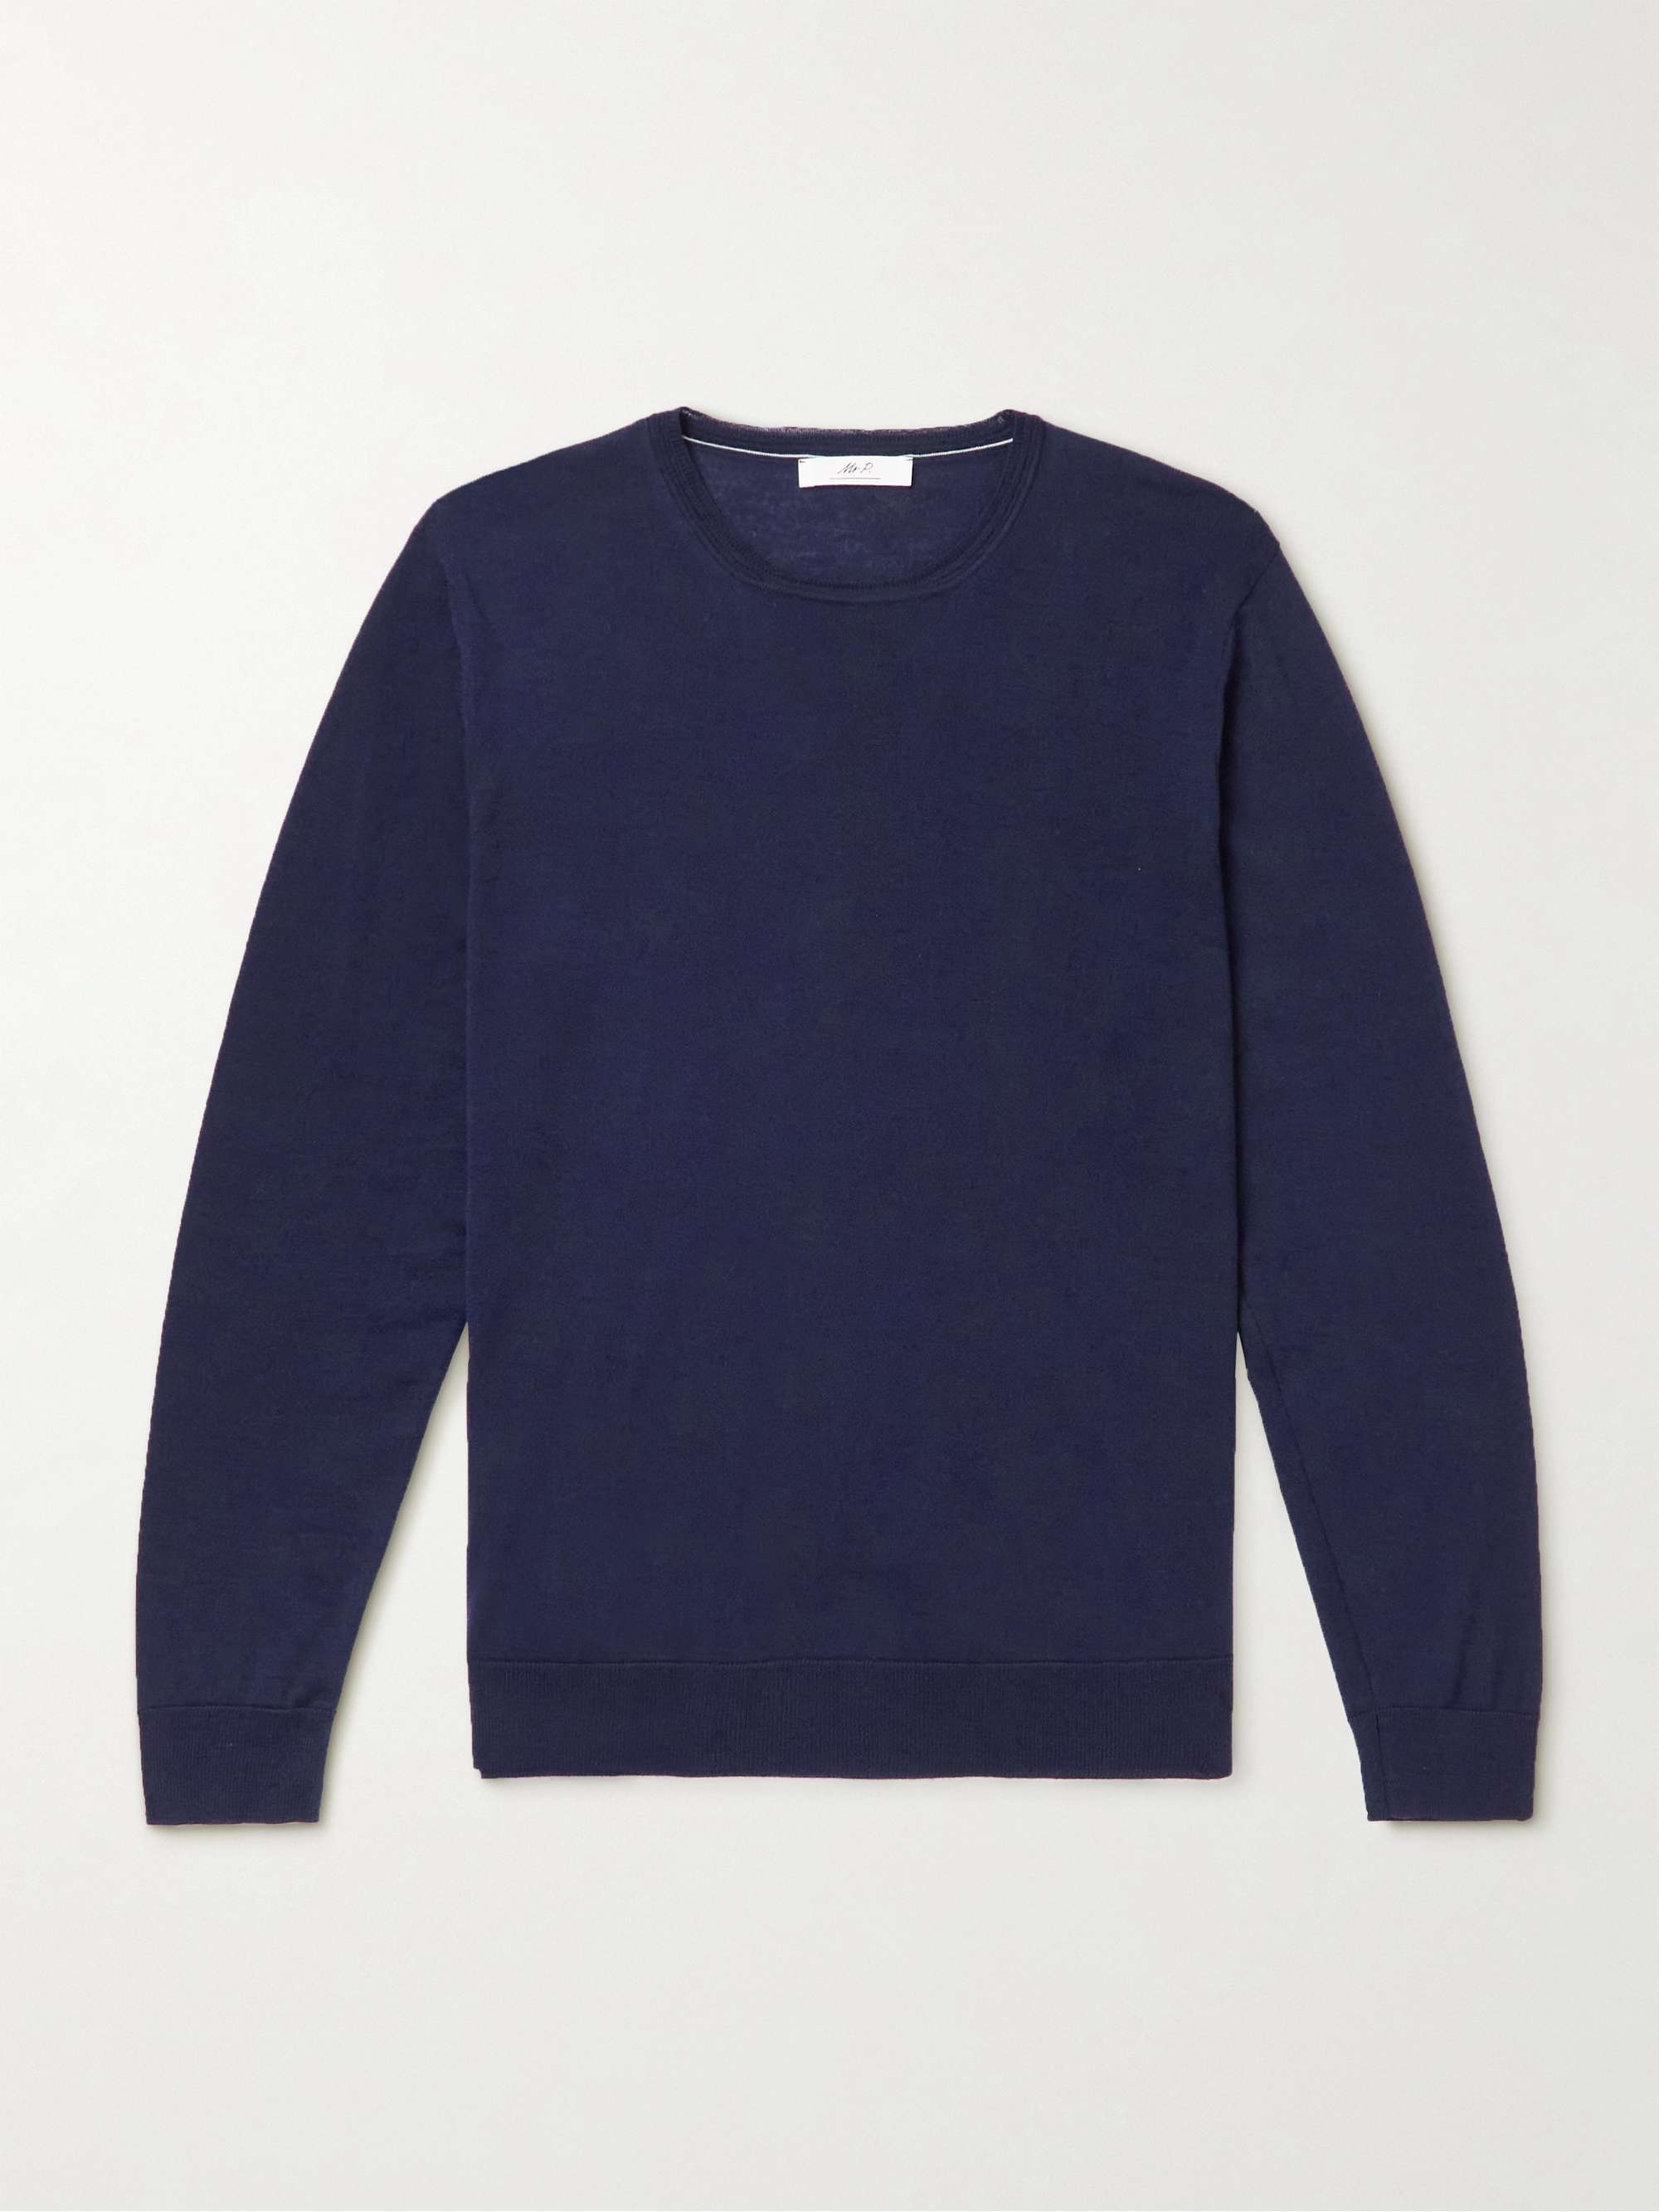 MR P. Slim-Fit Merino Wool Sweater